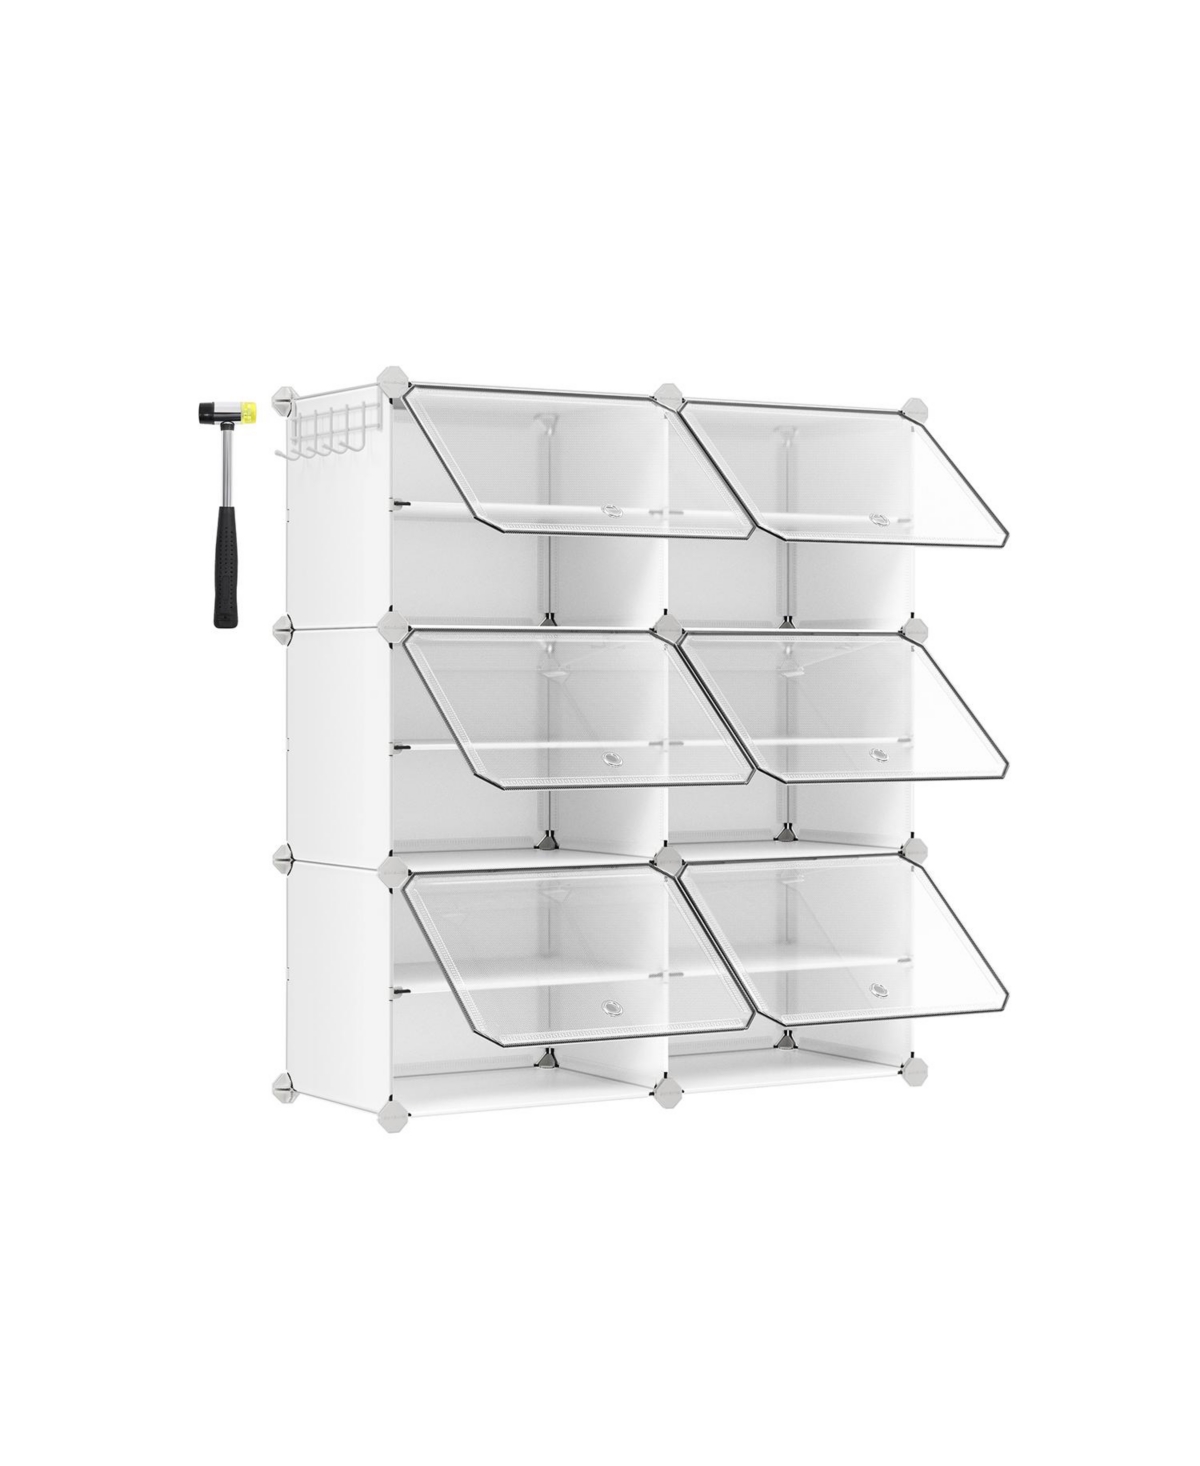 Interlocking Shoe Rack, Cubes Shoe Organizer with Doors, Plastic Shoe Storage Cabinet, 6 Cubes - White